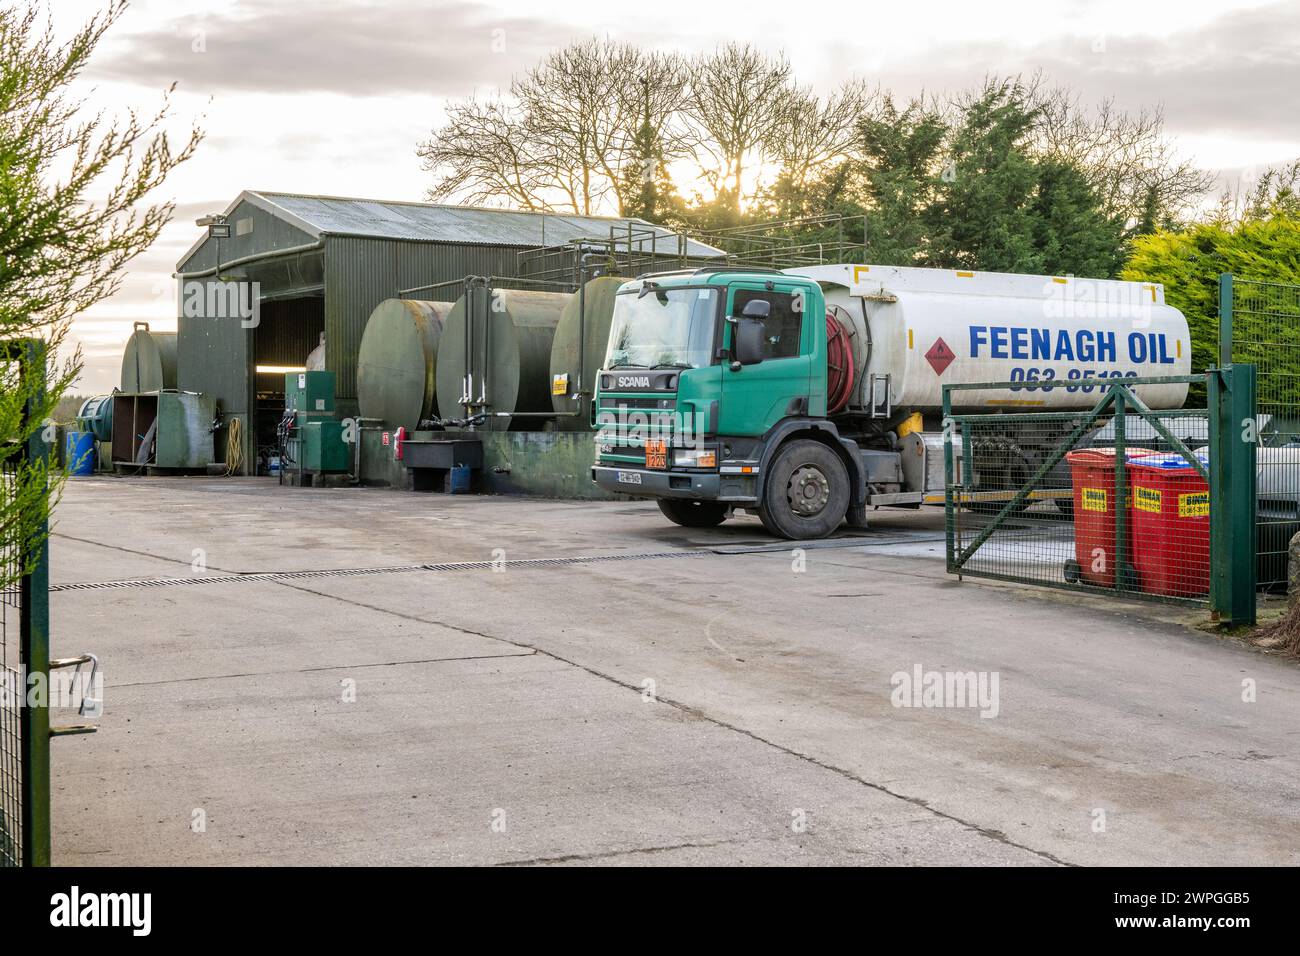 Oil depot in Feenagh, Co. Limerick, Ireland. Stock Photo